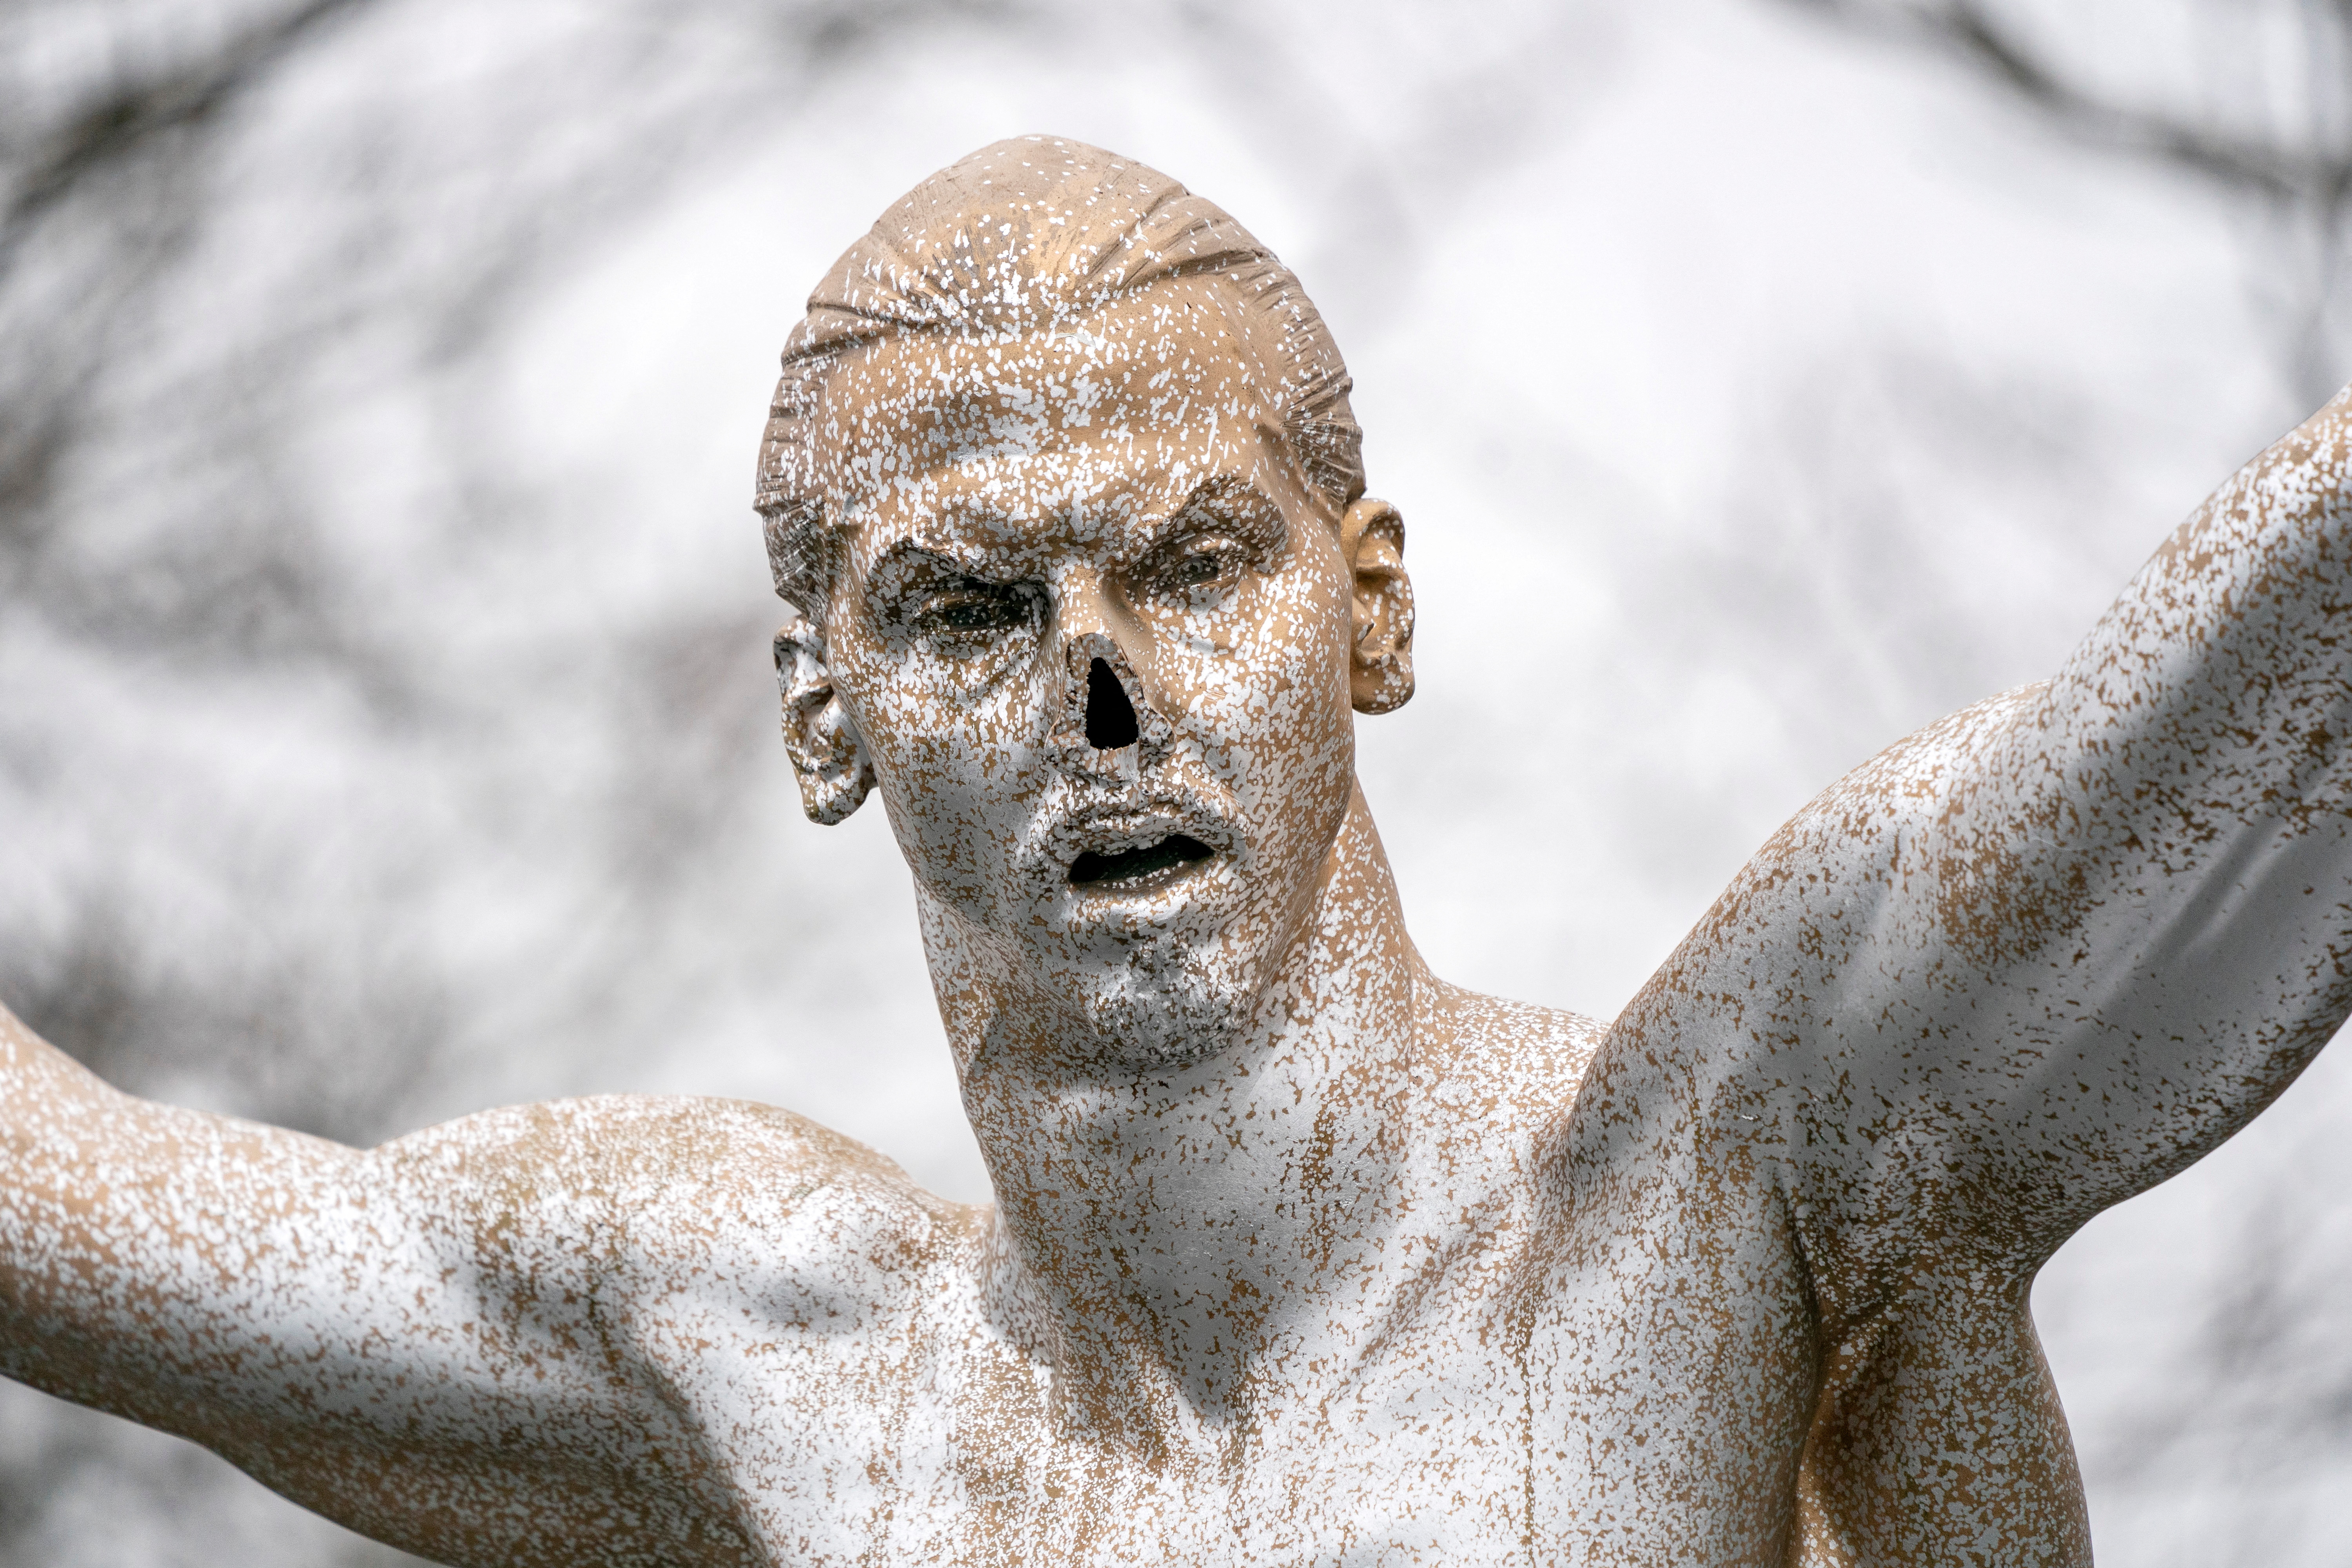 Vandalized Zlatan Ibrahimovic statue is seen in Malmo